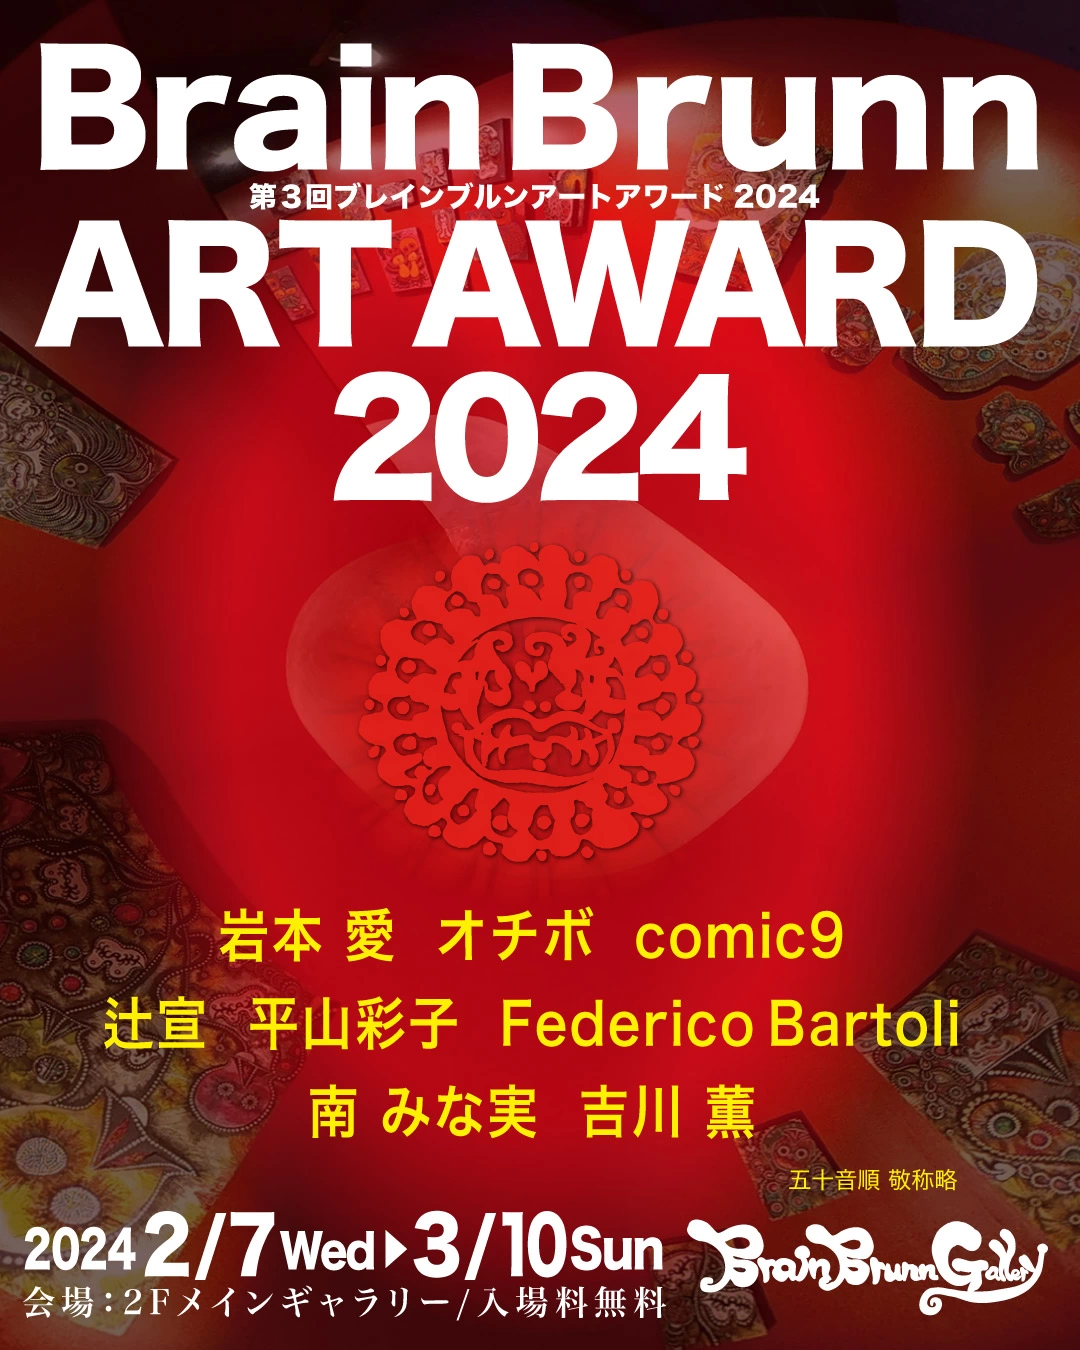 「BrainBrunn ART AWARD 2024」 展